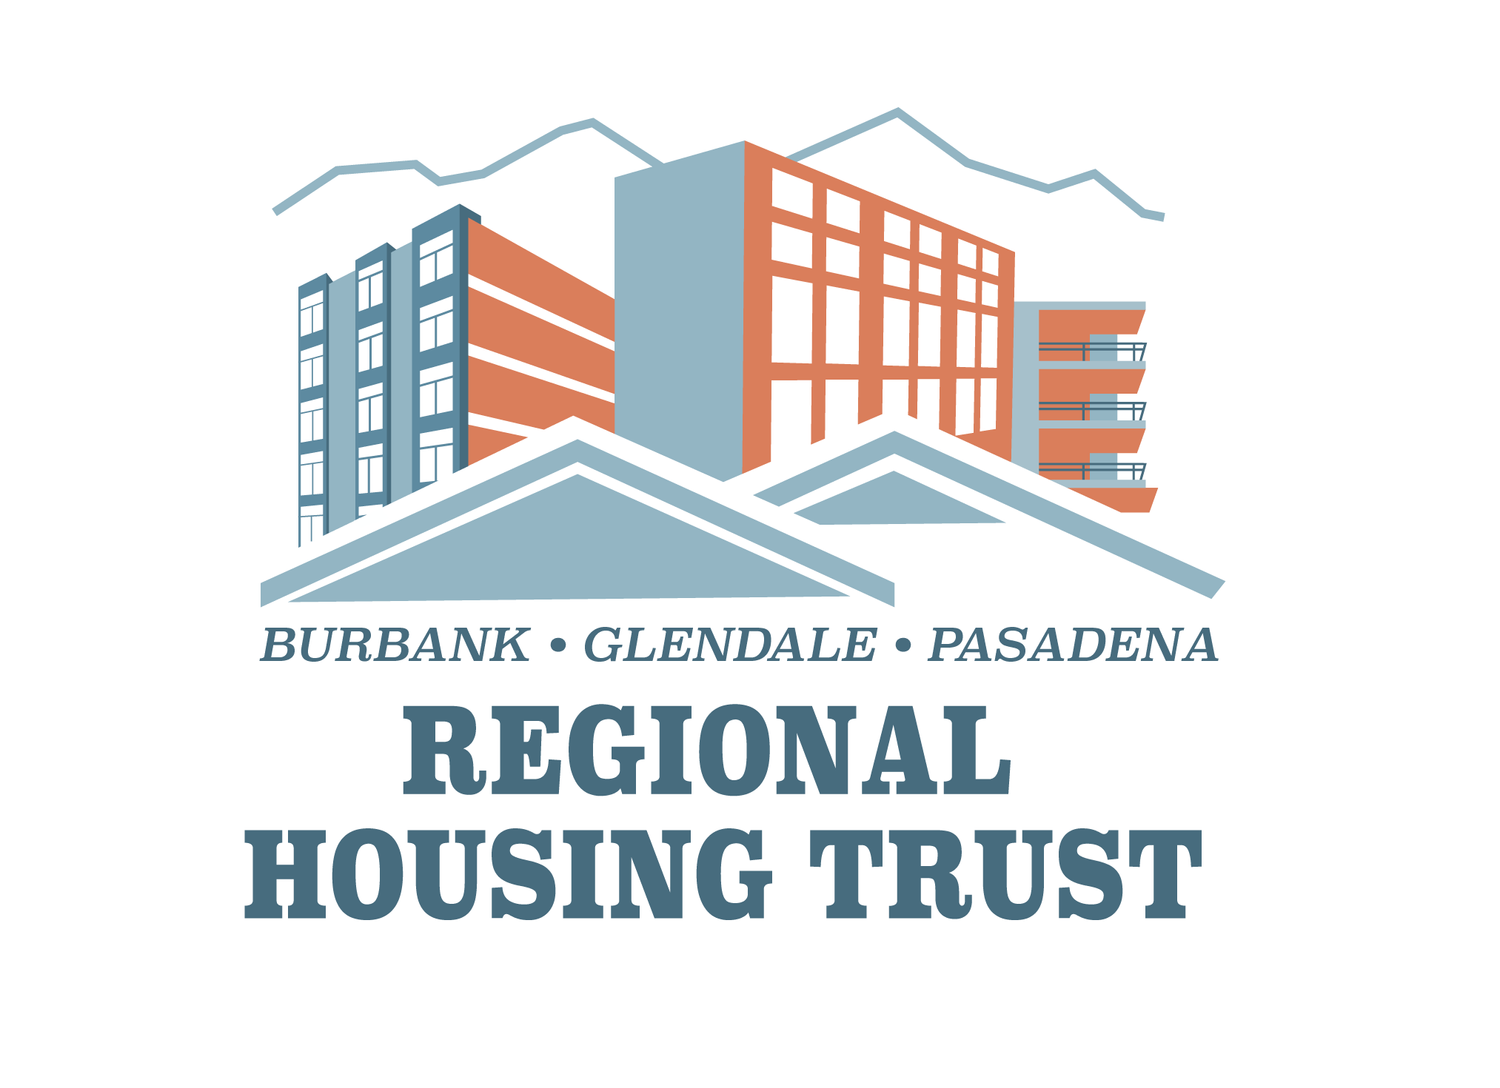 Burbank-Glendale-Pasadena Regional Housing Trust